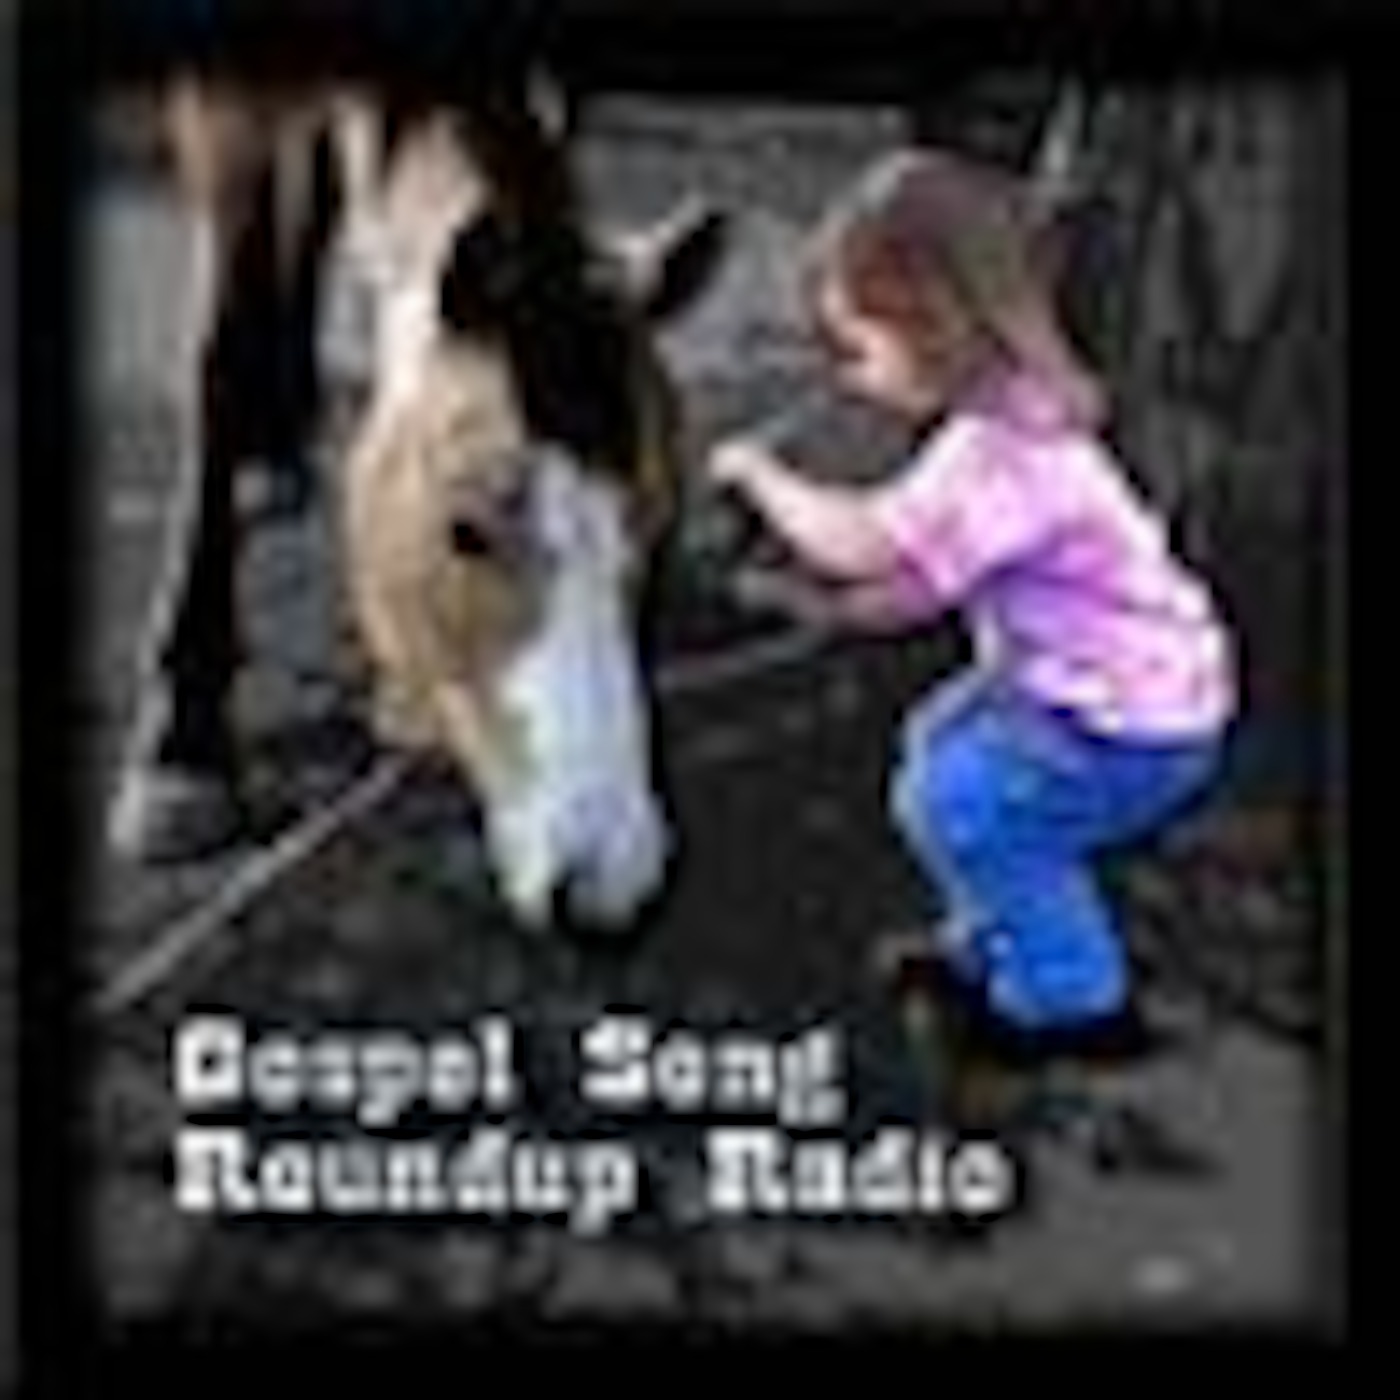 Gospel Song Roundup Radio - No. 25 Dial-up